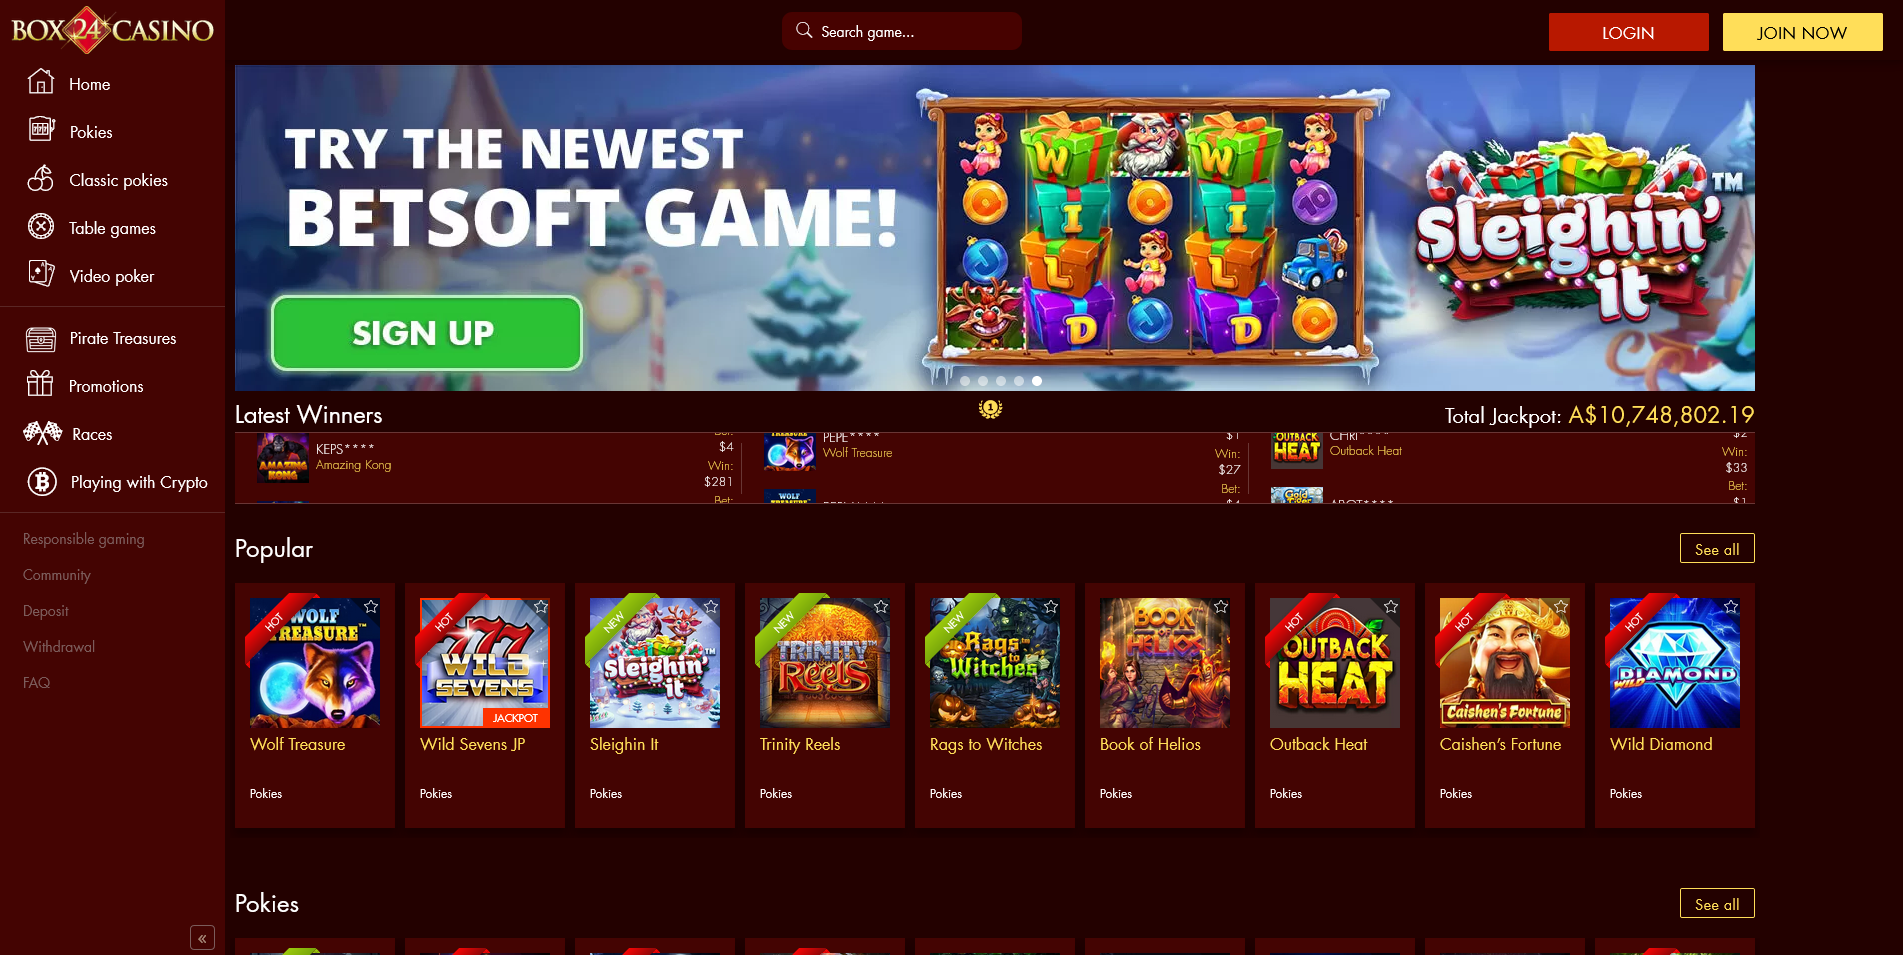 Screenshot of the Box 24 Casino home page